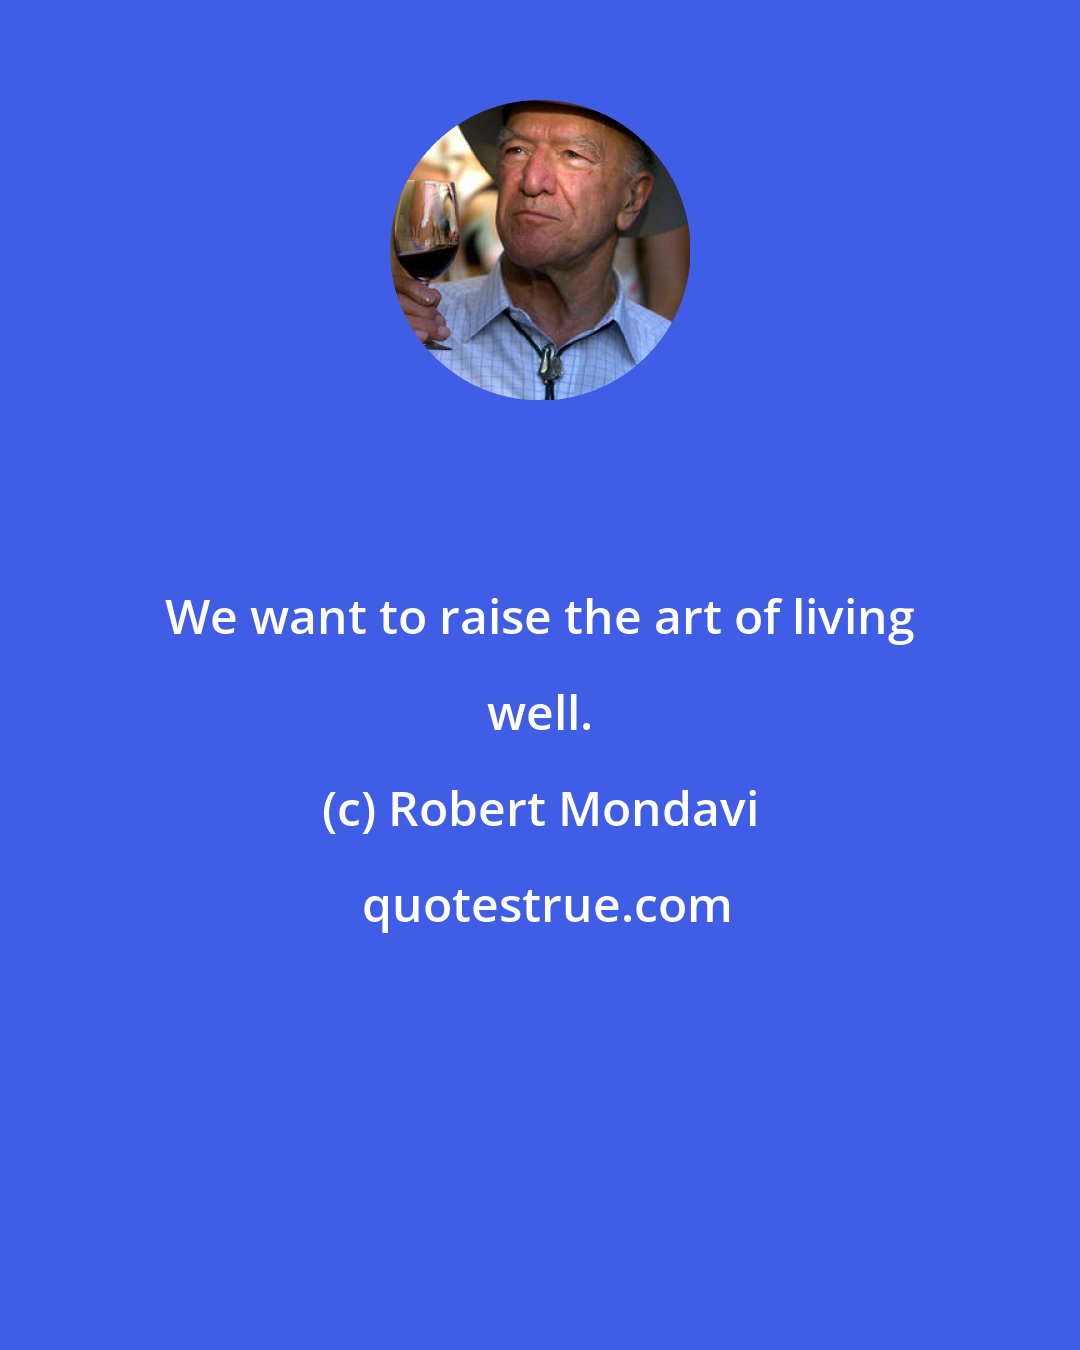 Robert Mondavi: We want to raise the art of living well.